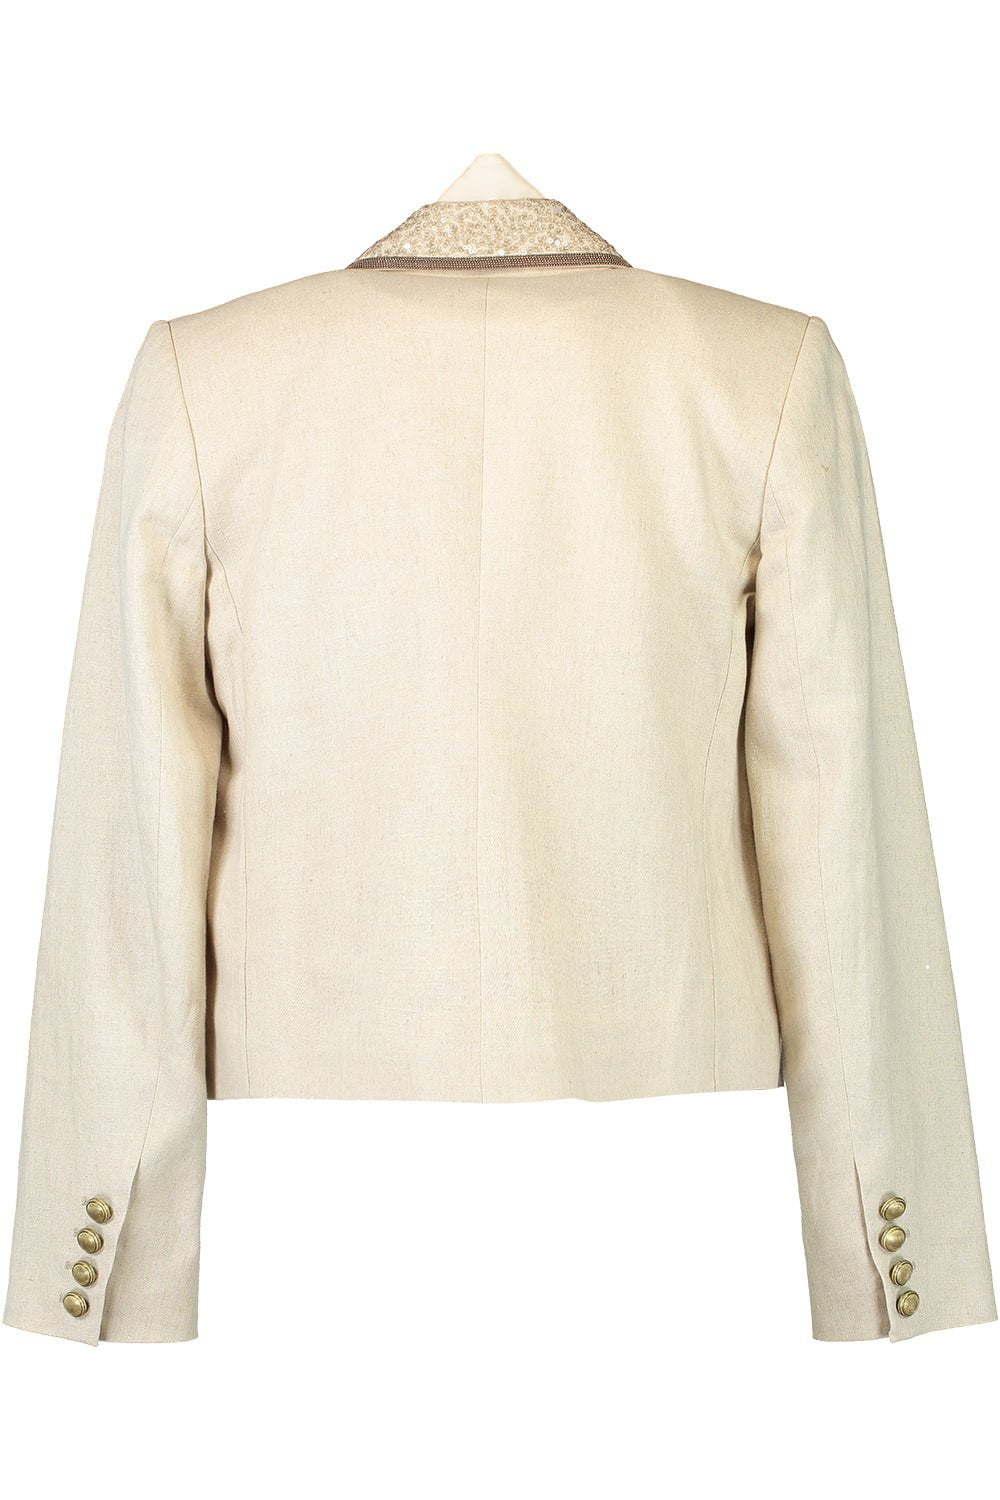 BRUNELLO CUCINELLI-Cropped Linen Paillette Collar Jacket-OYSTER